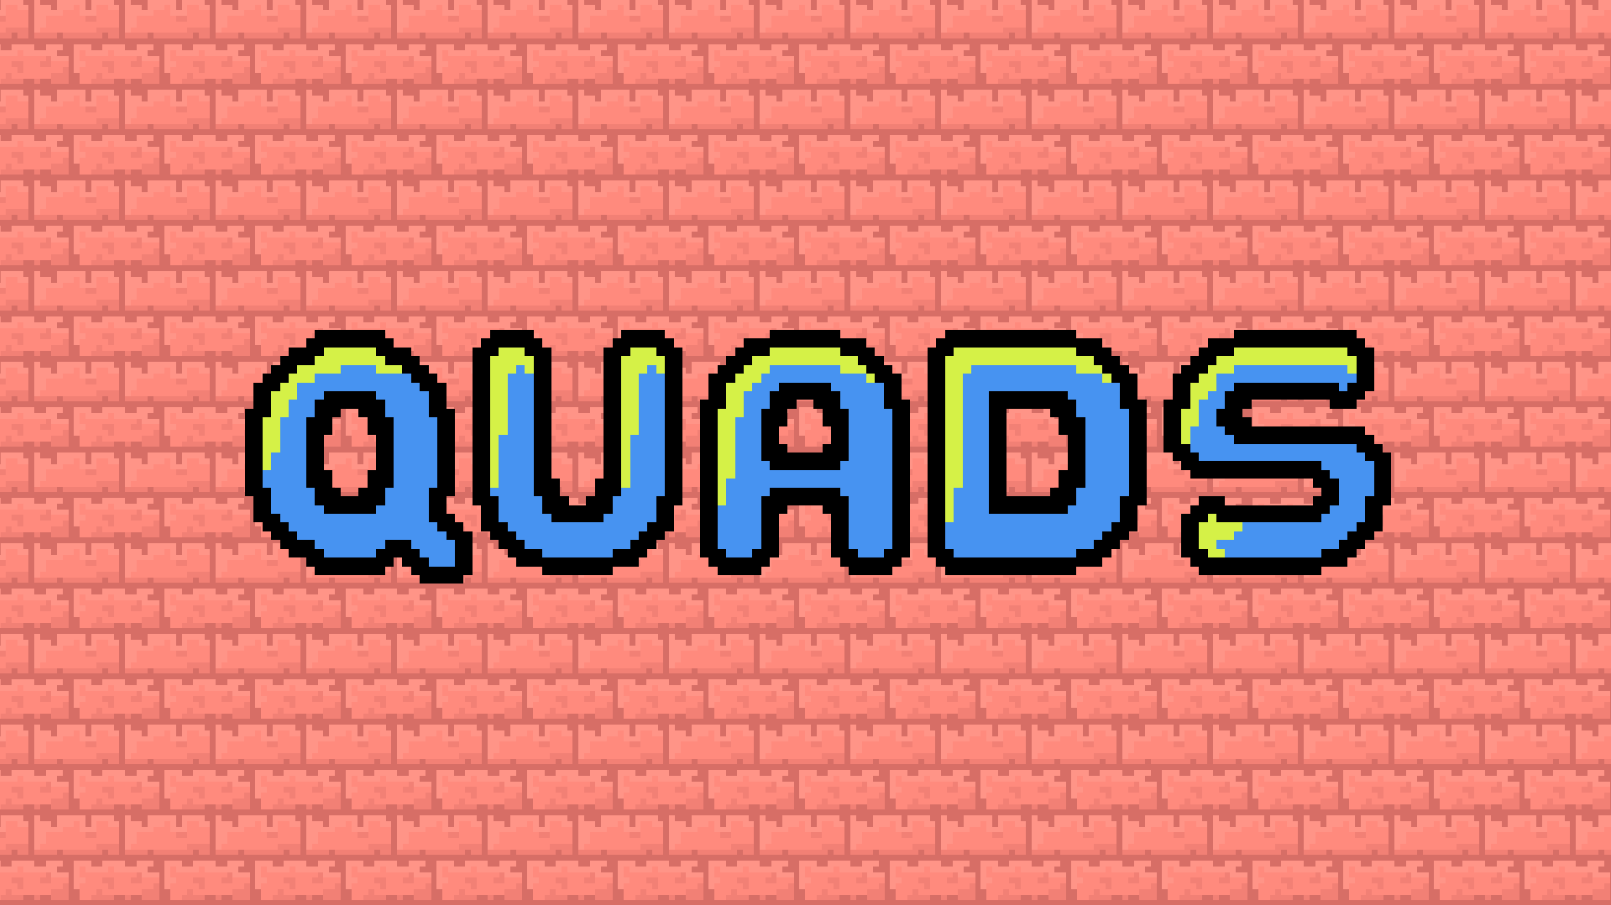 Quads: a 40 second game